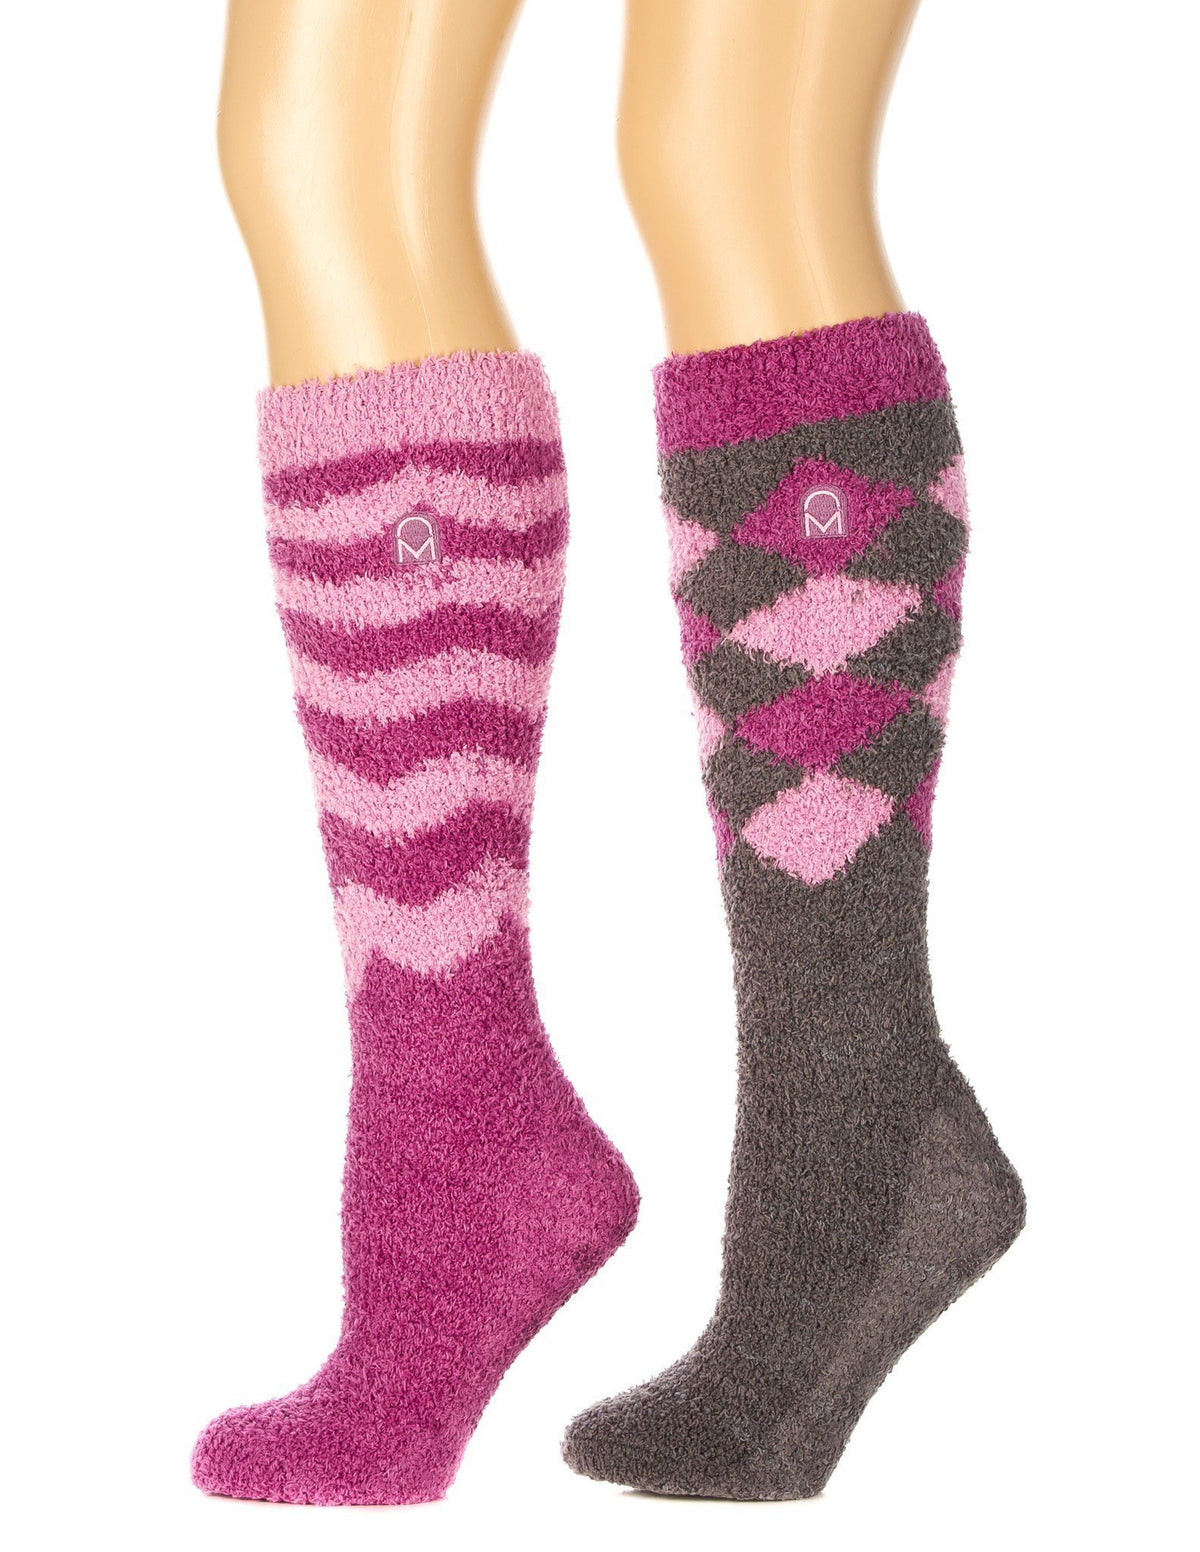 Women's (2 Pairs) Soft Anti-Skid Fuzzy Winter Knee High Socks - Set A6